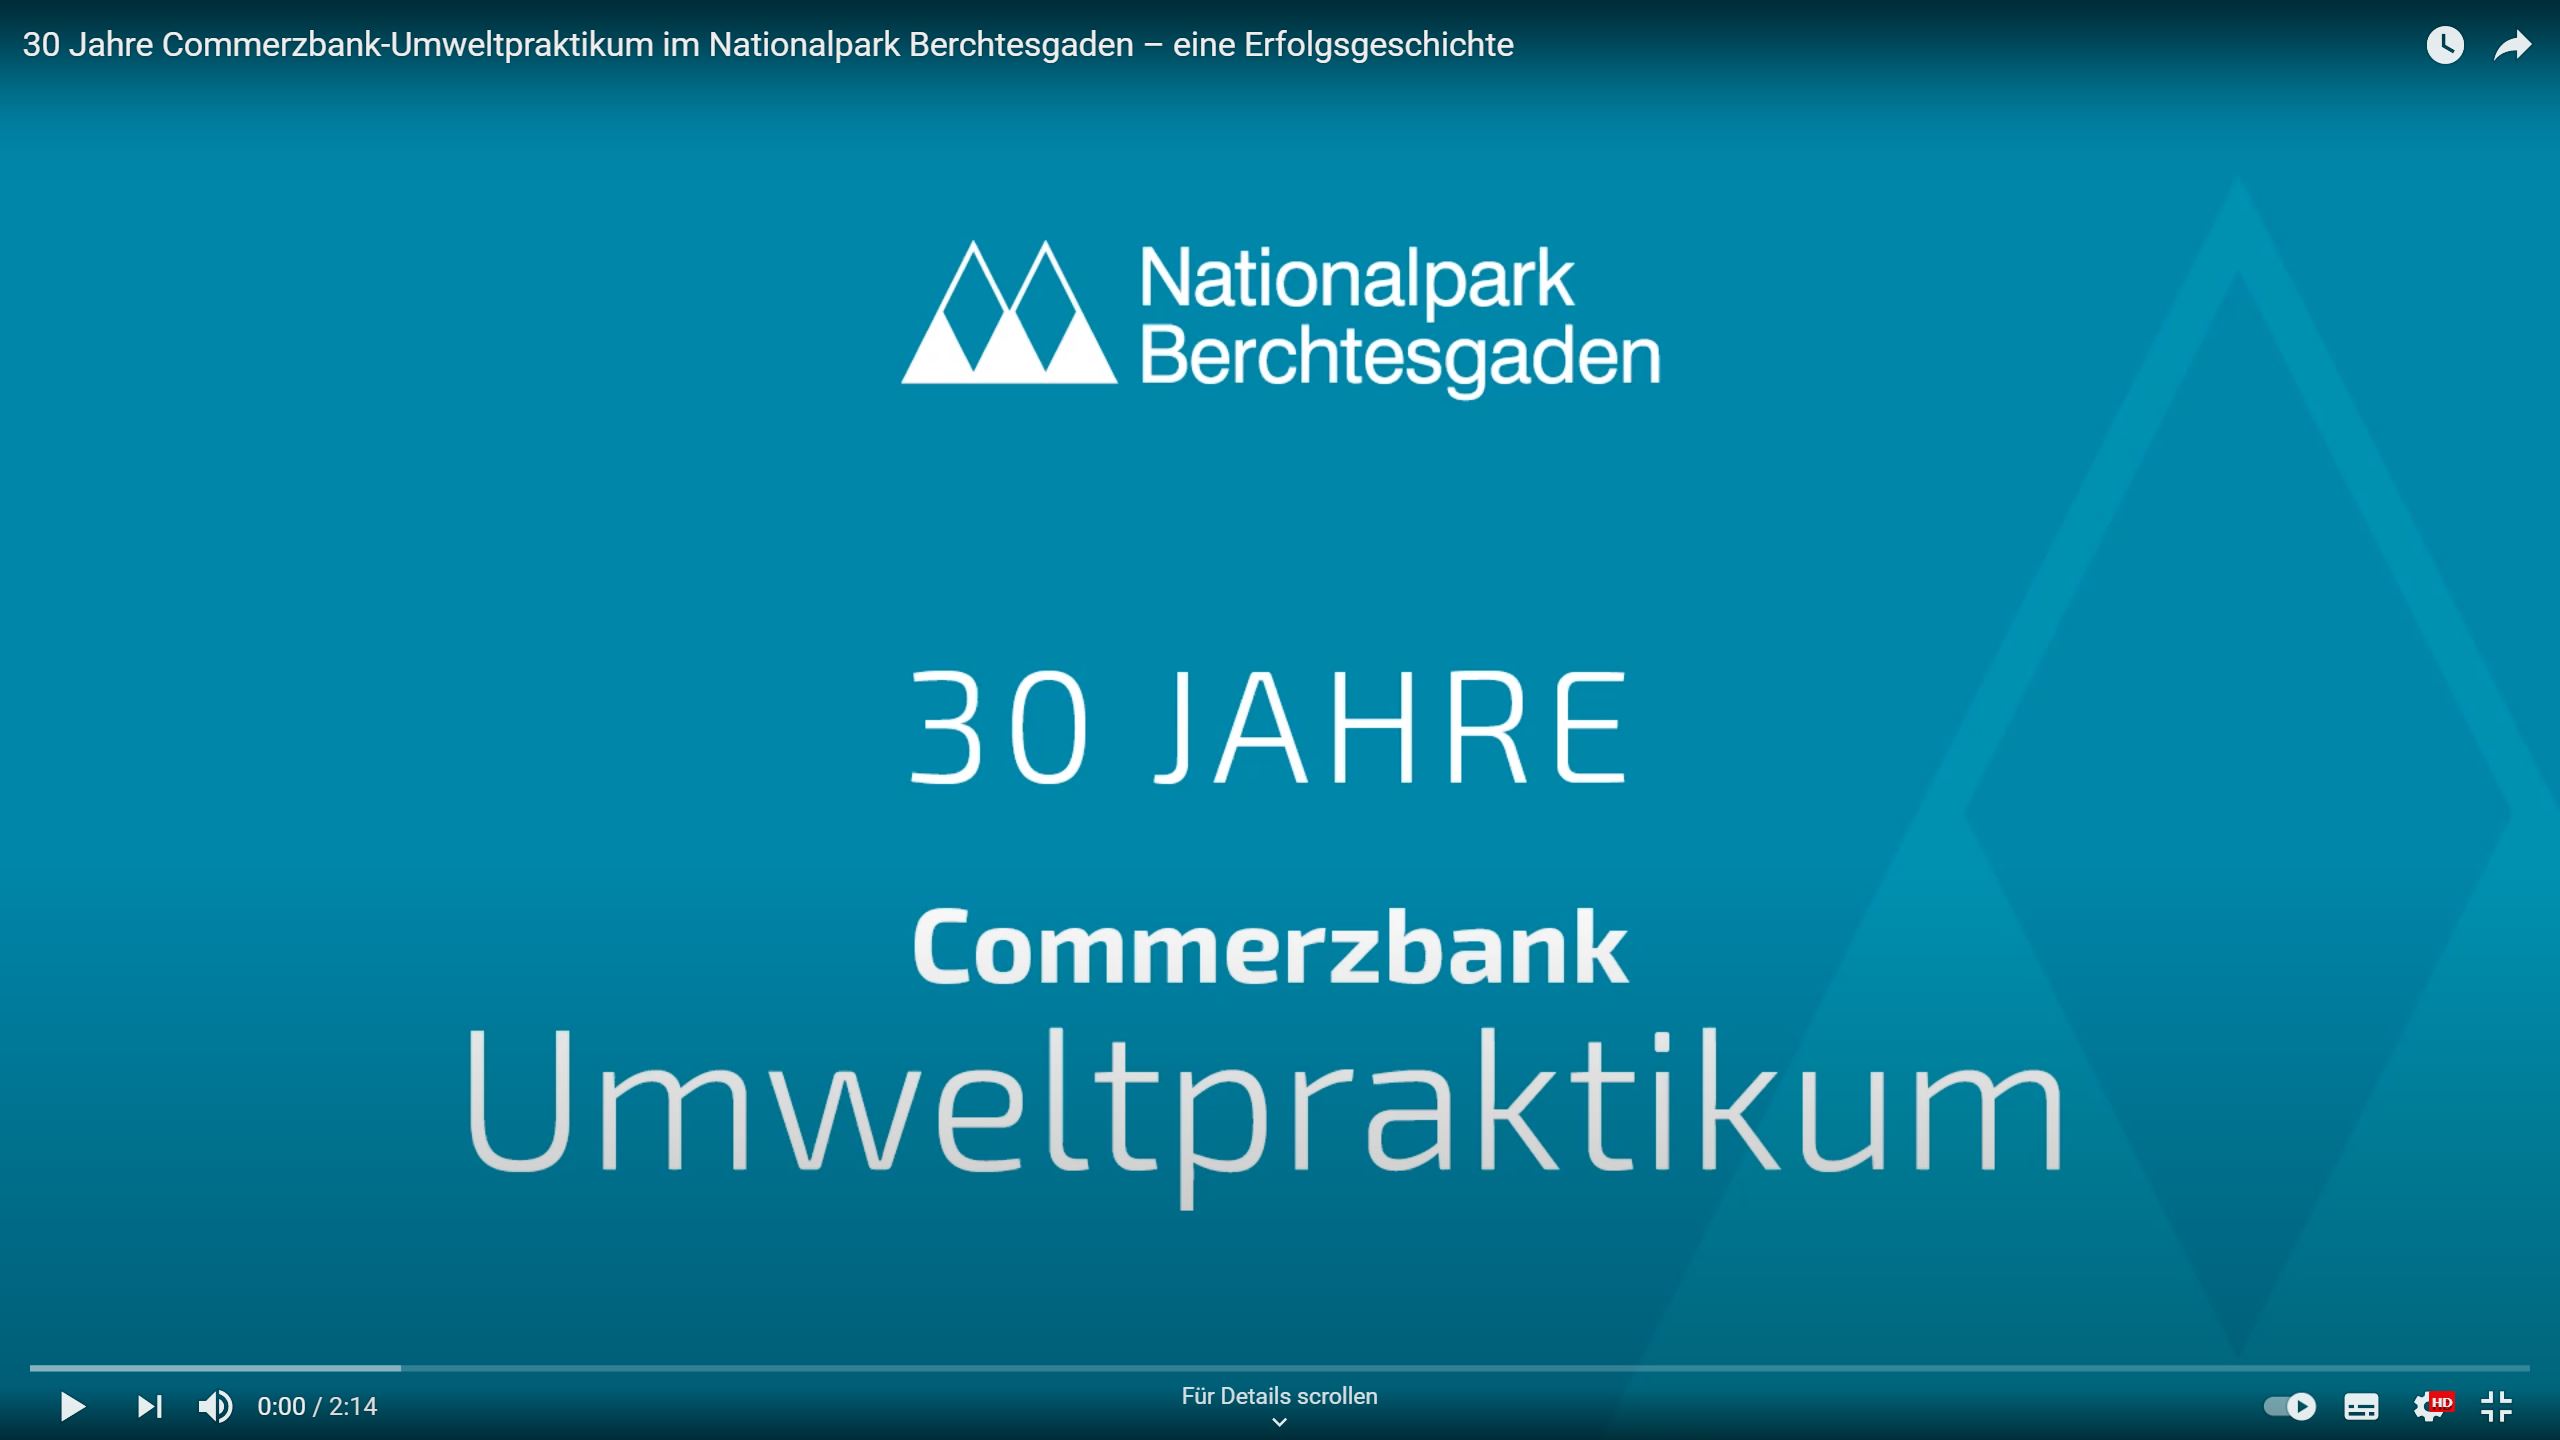 30 years Commerzbank environmental internship